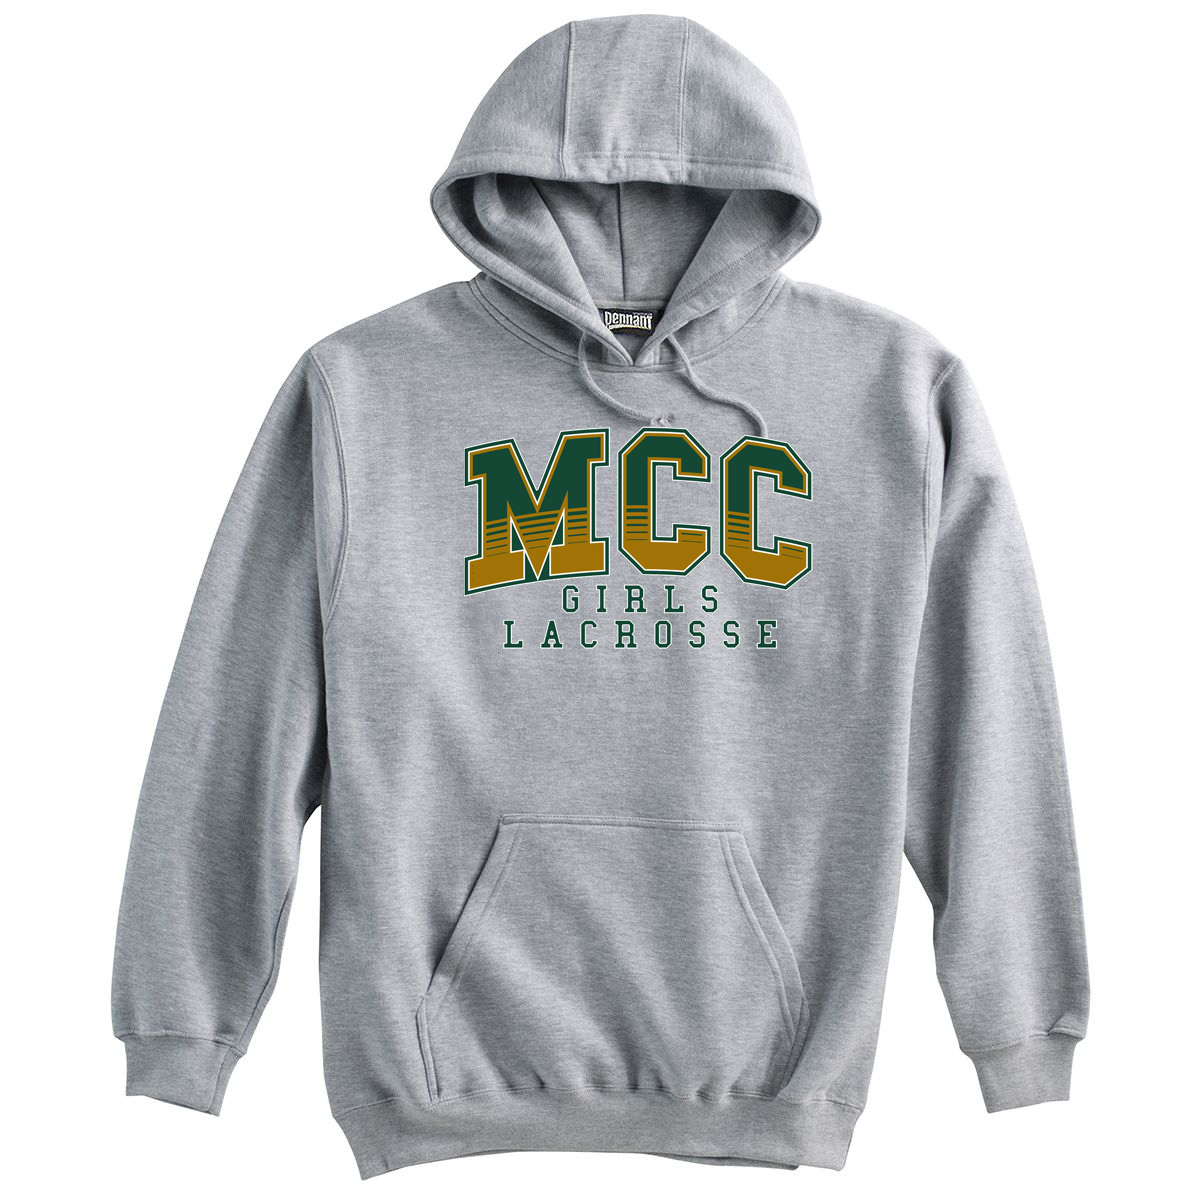 MCC Lacrosse  Sweatshirt